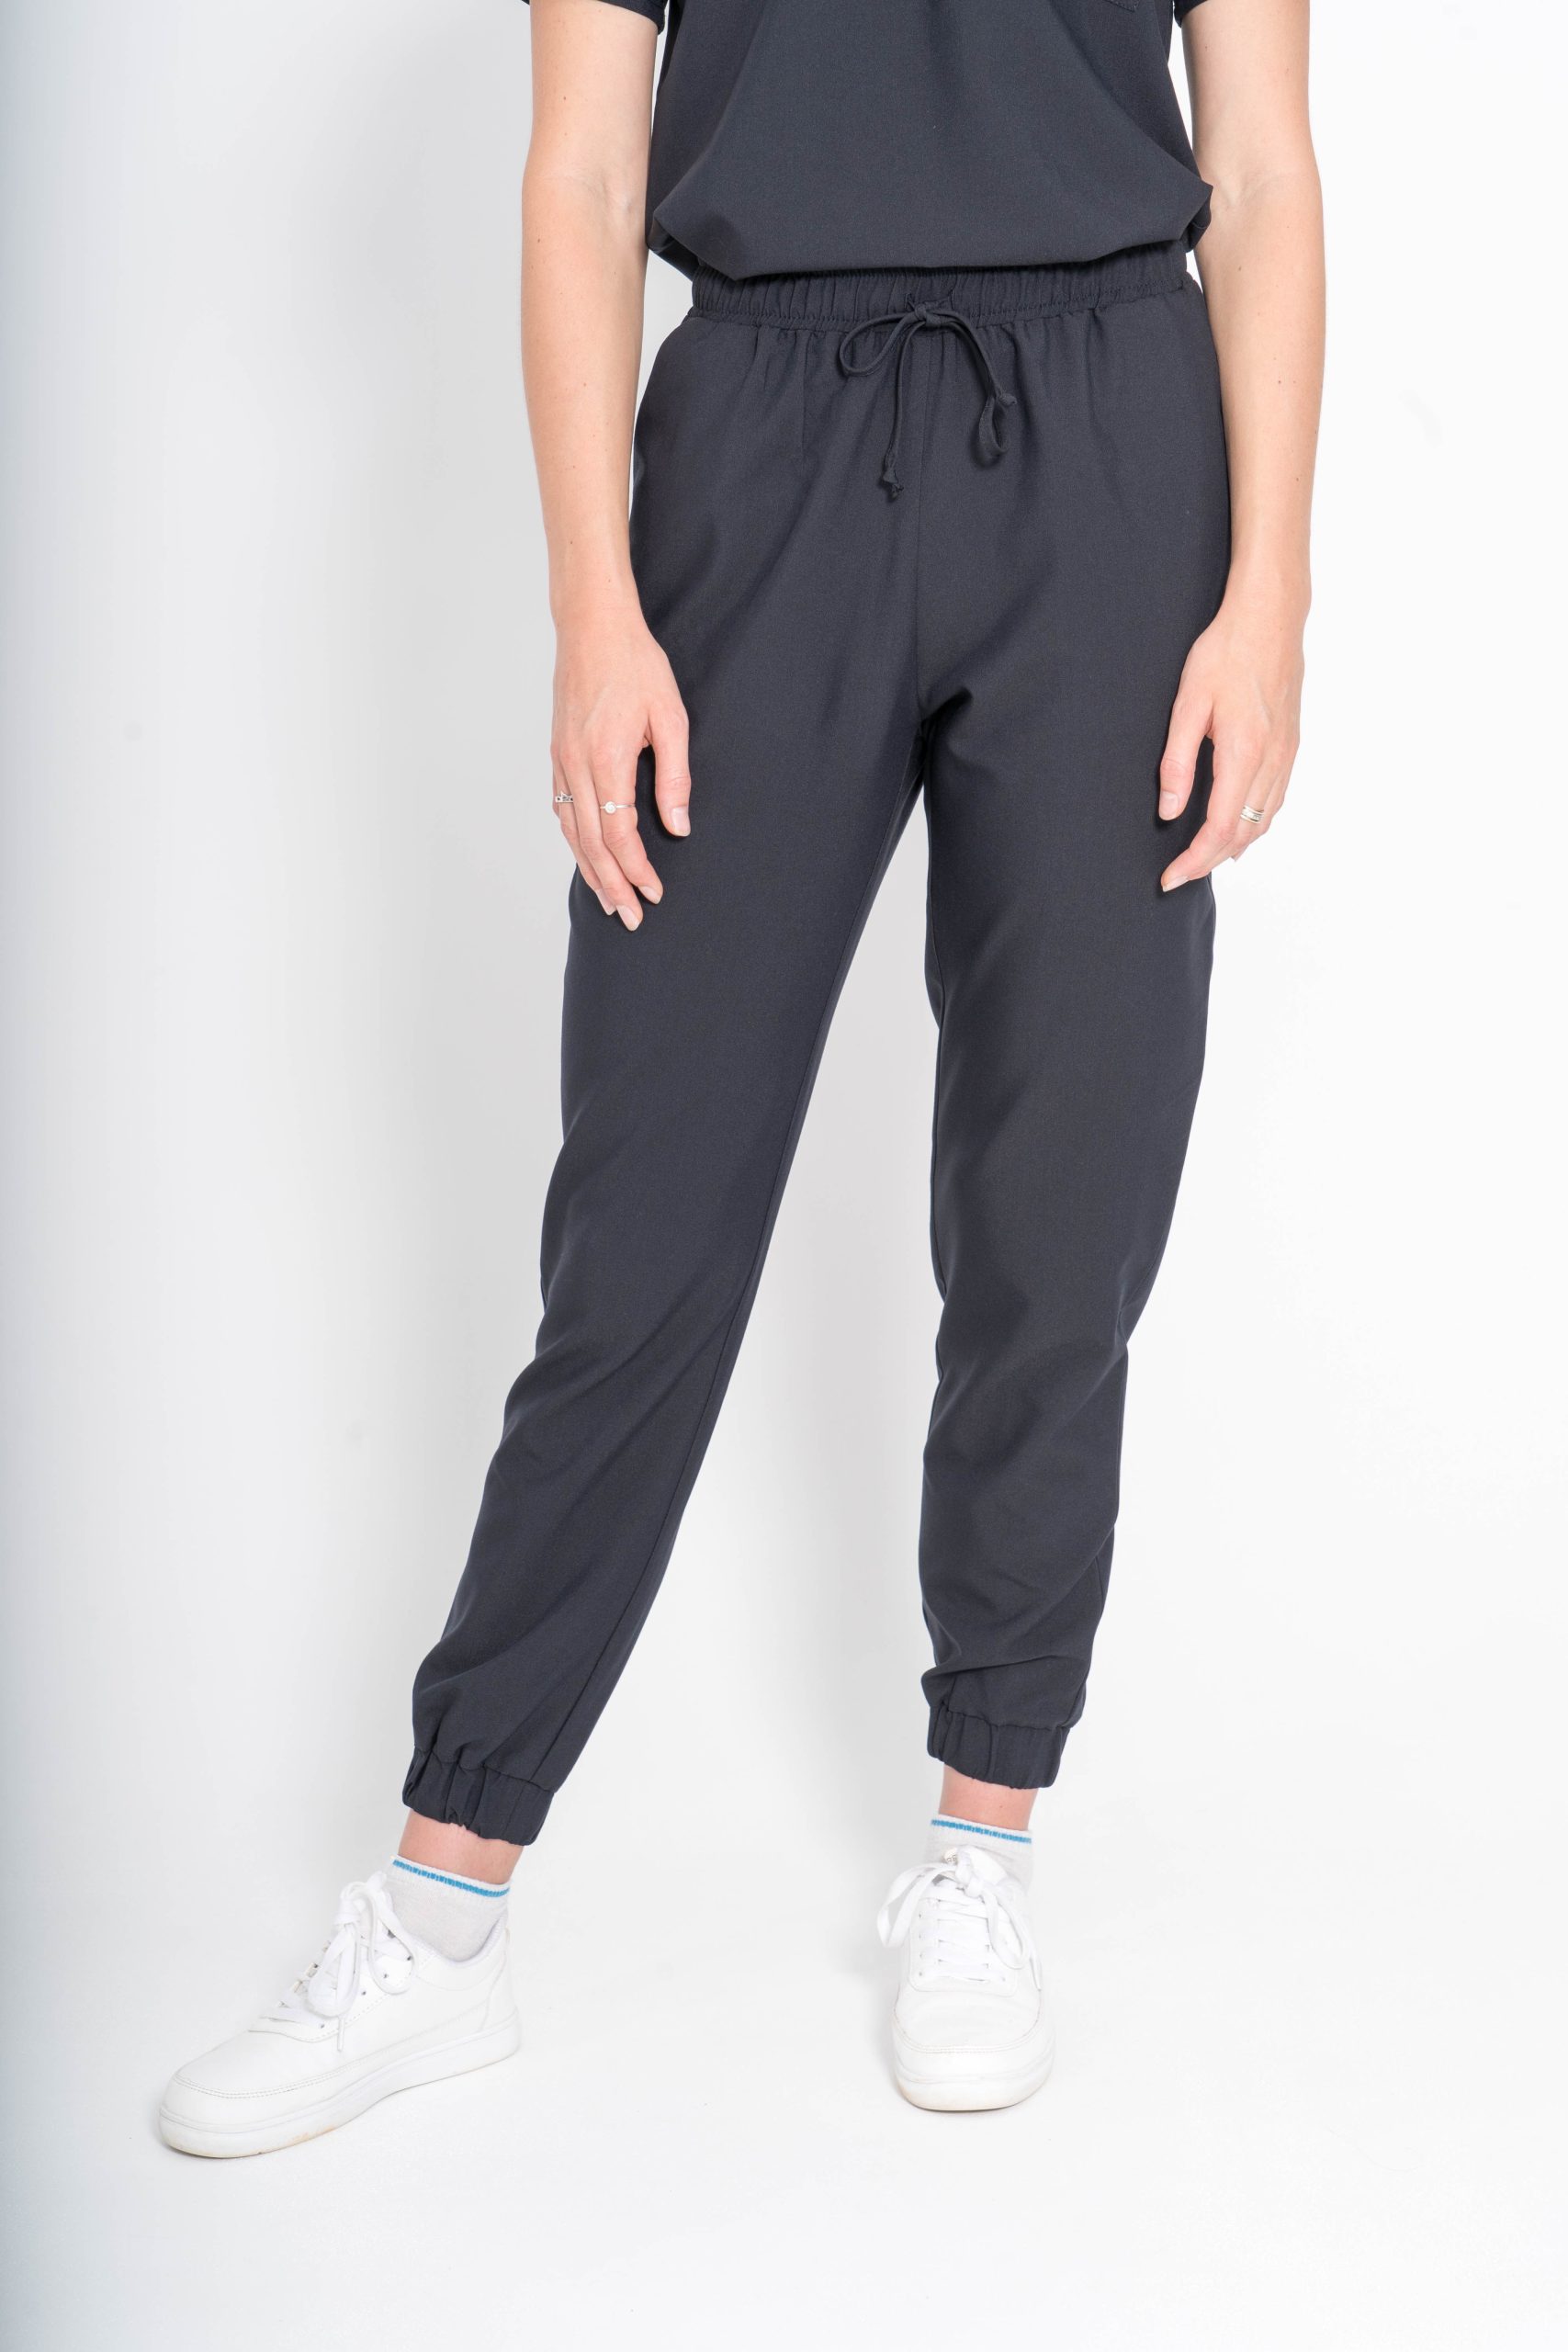 Dark Navy Ladies Pants - Basix Clothing